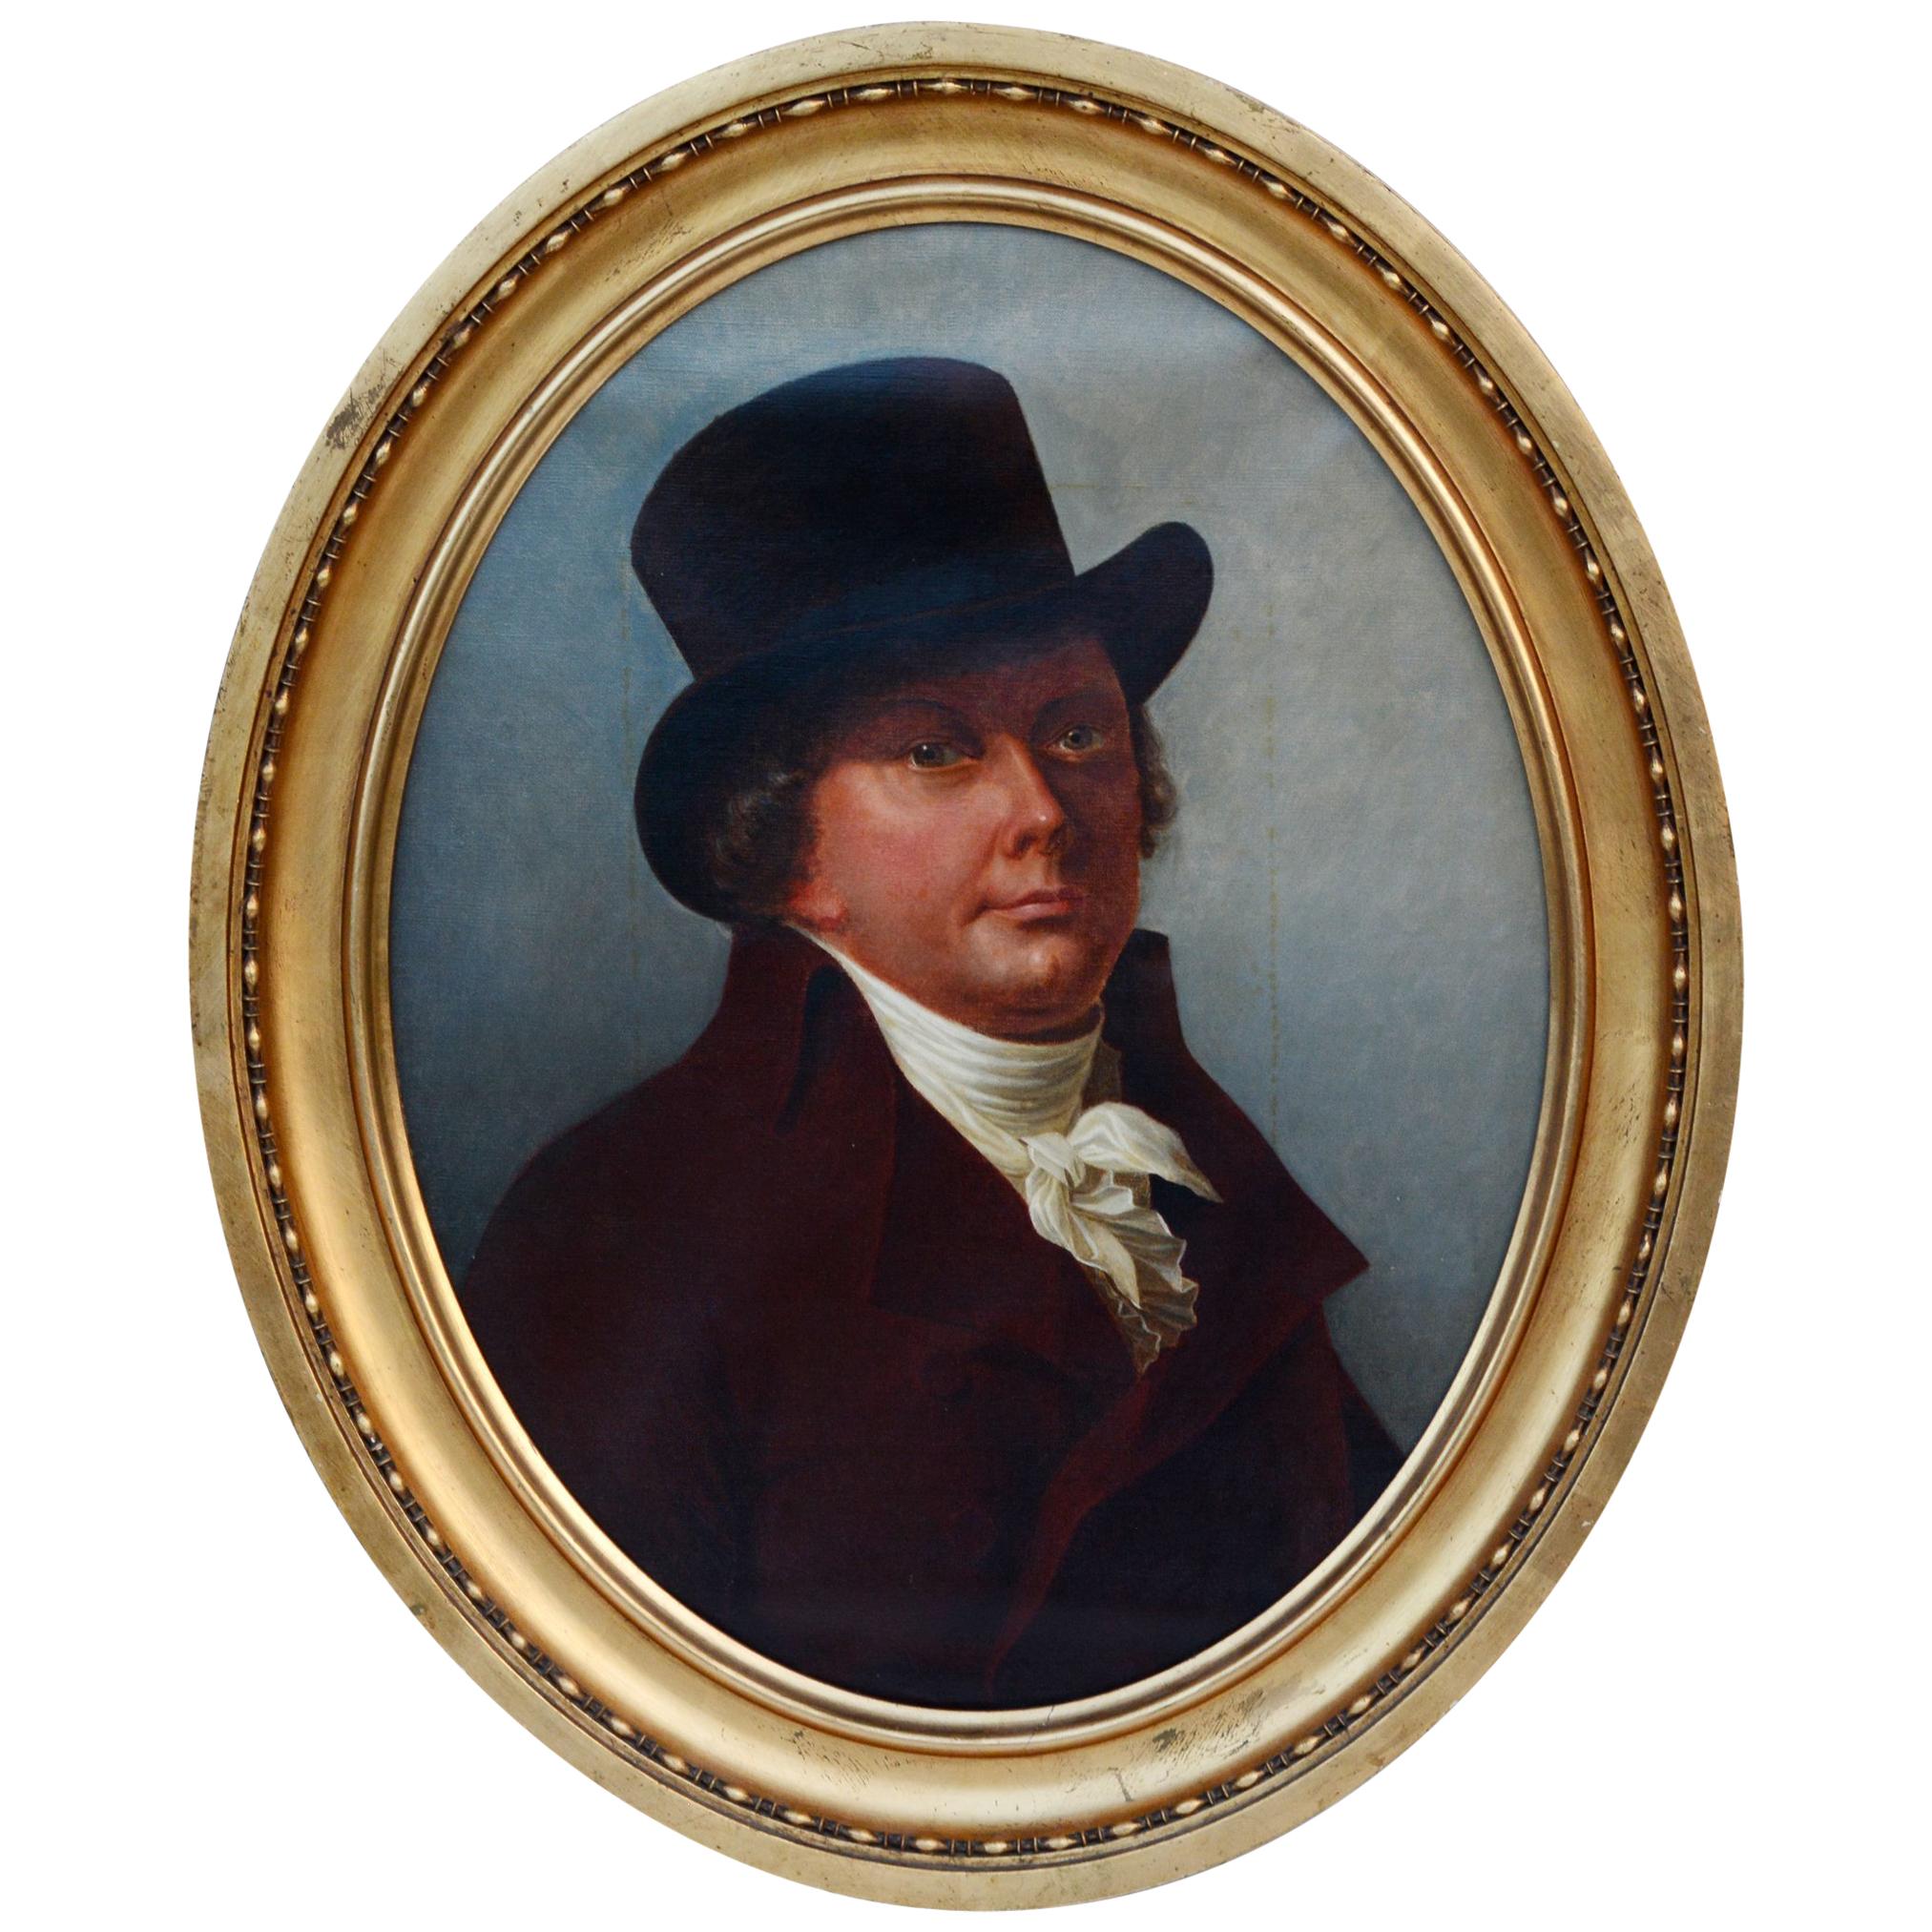 Successor of Jens Juel, Portrait of Merchant Poul Johan Schouw, 1850s